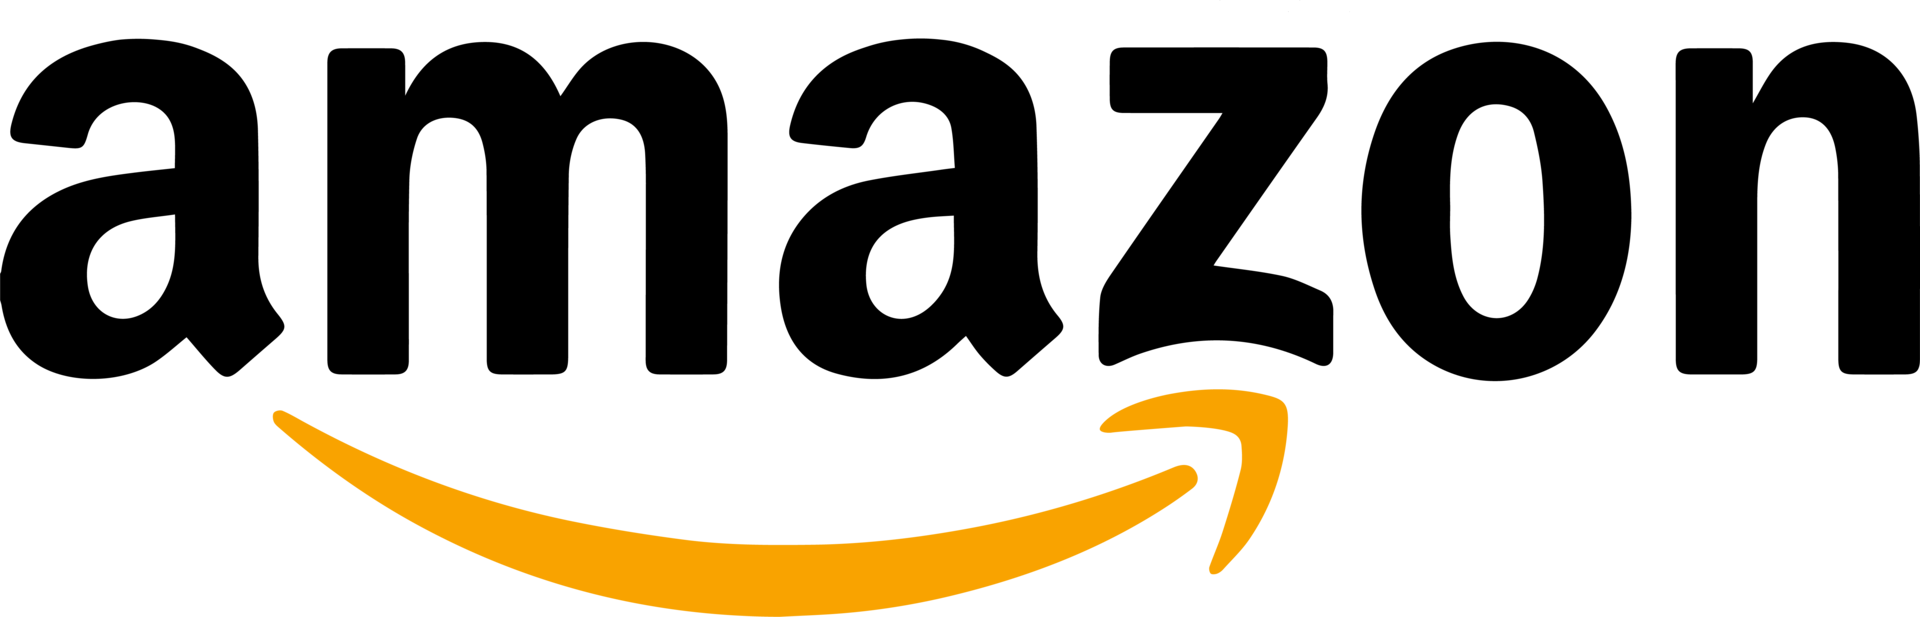 Amazon logotype illustration. Popular online shoping icon. png